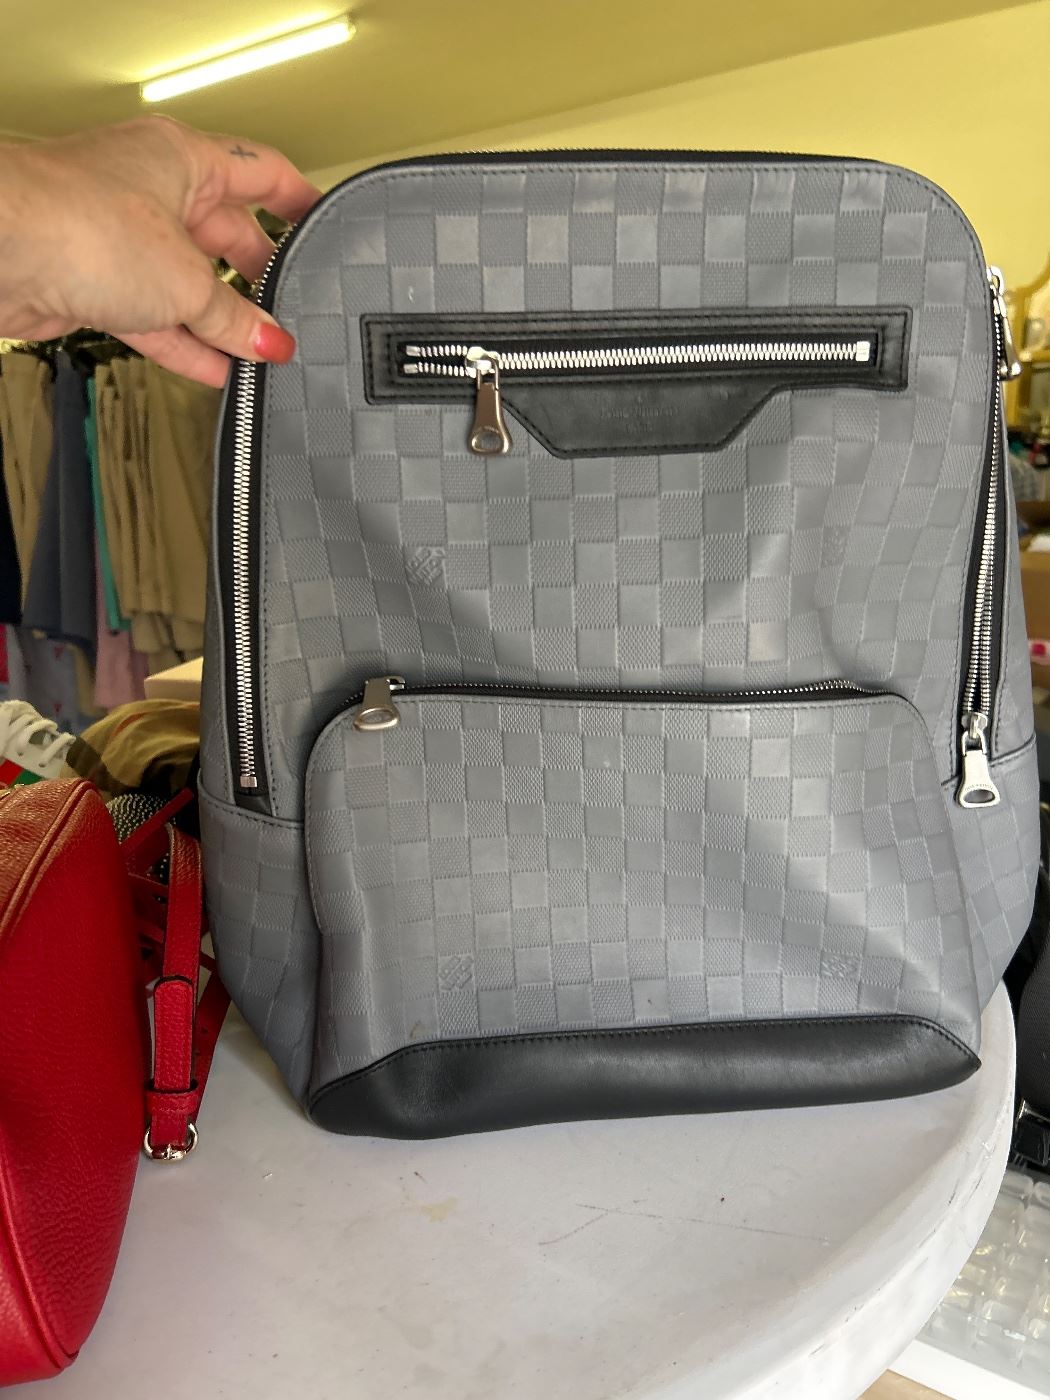 Gentle used LV backpack!  $750 or best offer